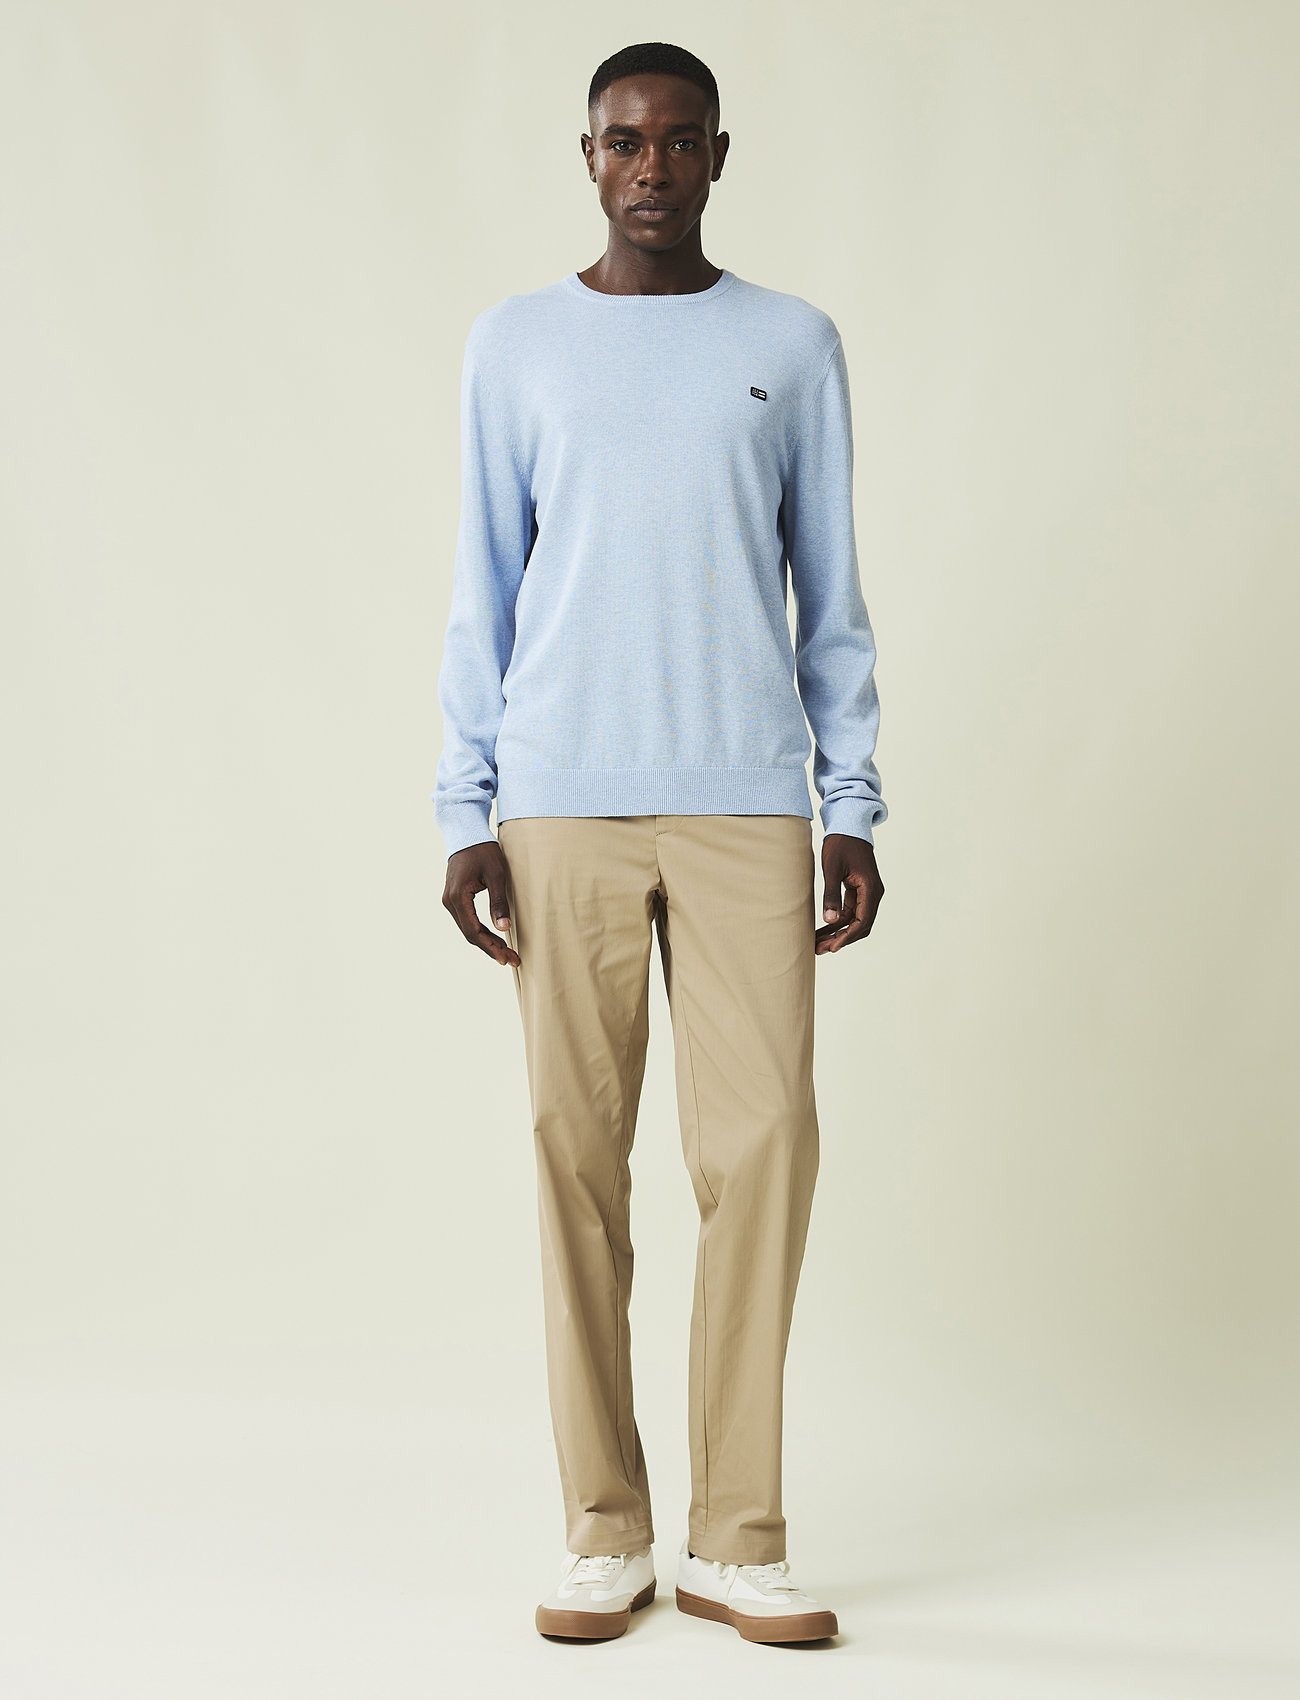 Lexington Clothing - Bradley Cotton Crew Sweater - rundhals - light blue - 1